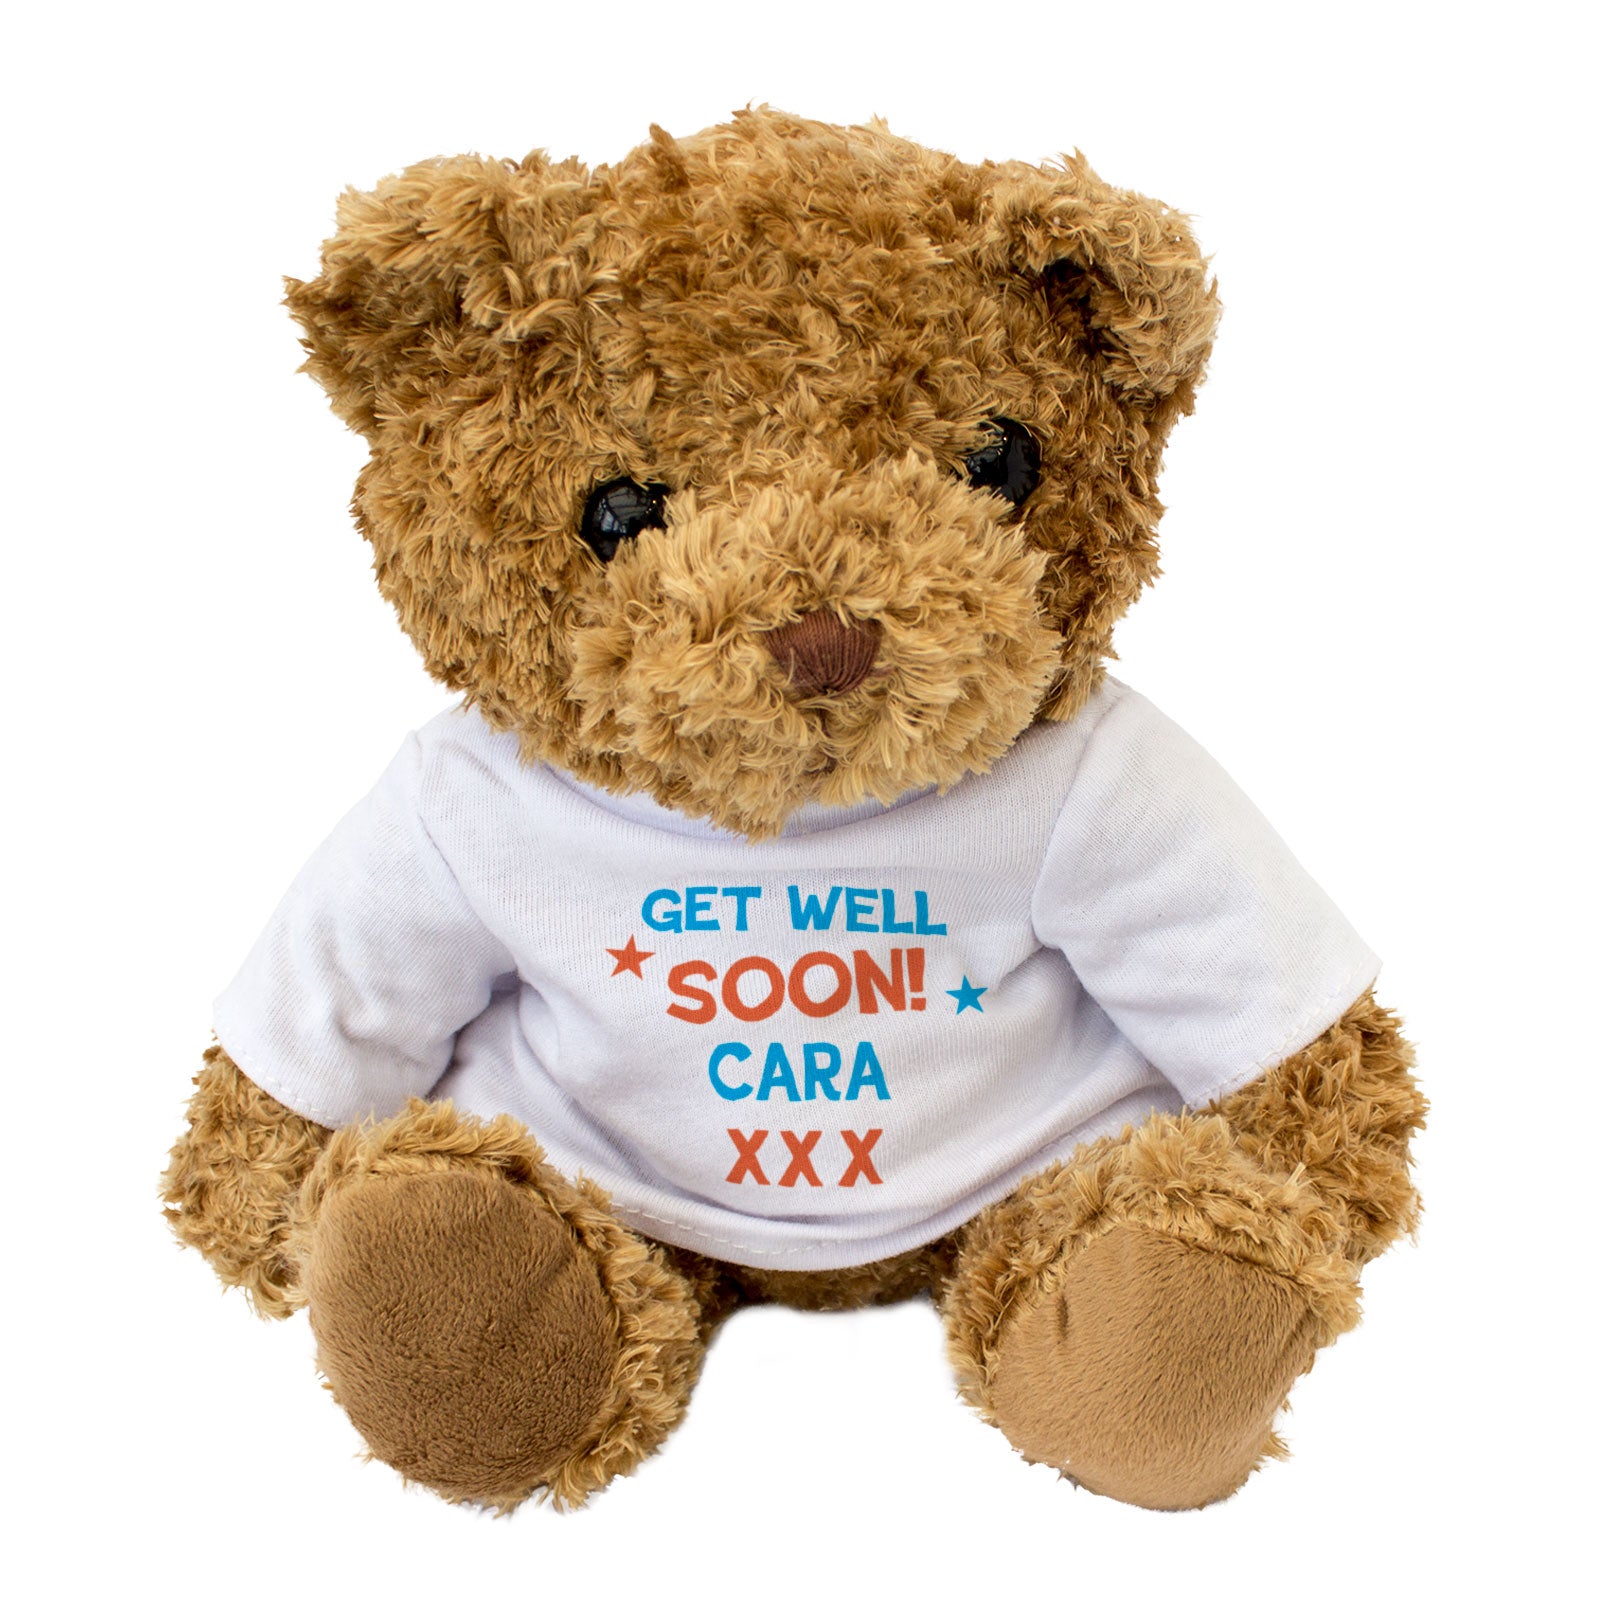 Get Well Soon Cara - Teddy Bear